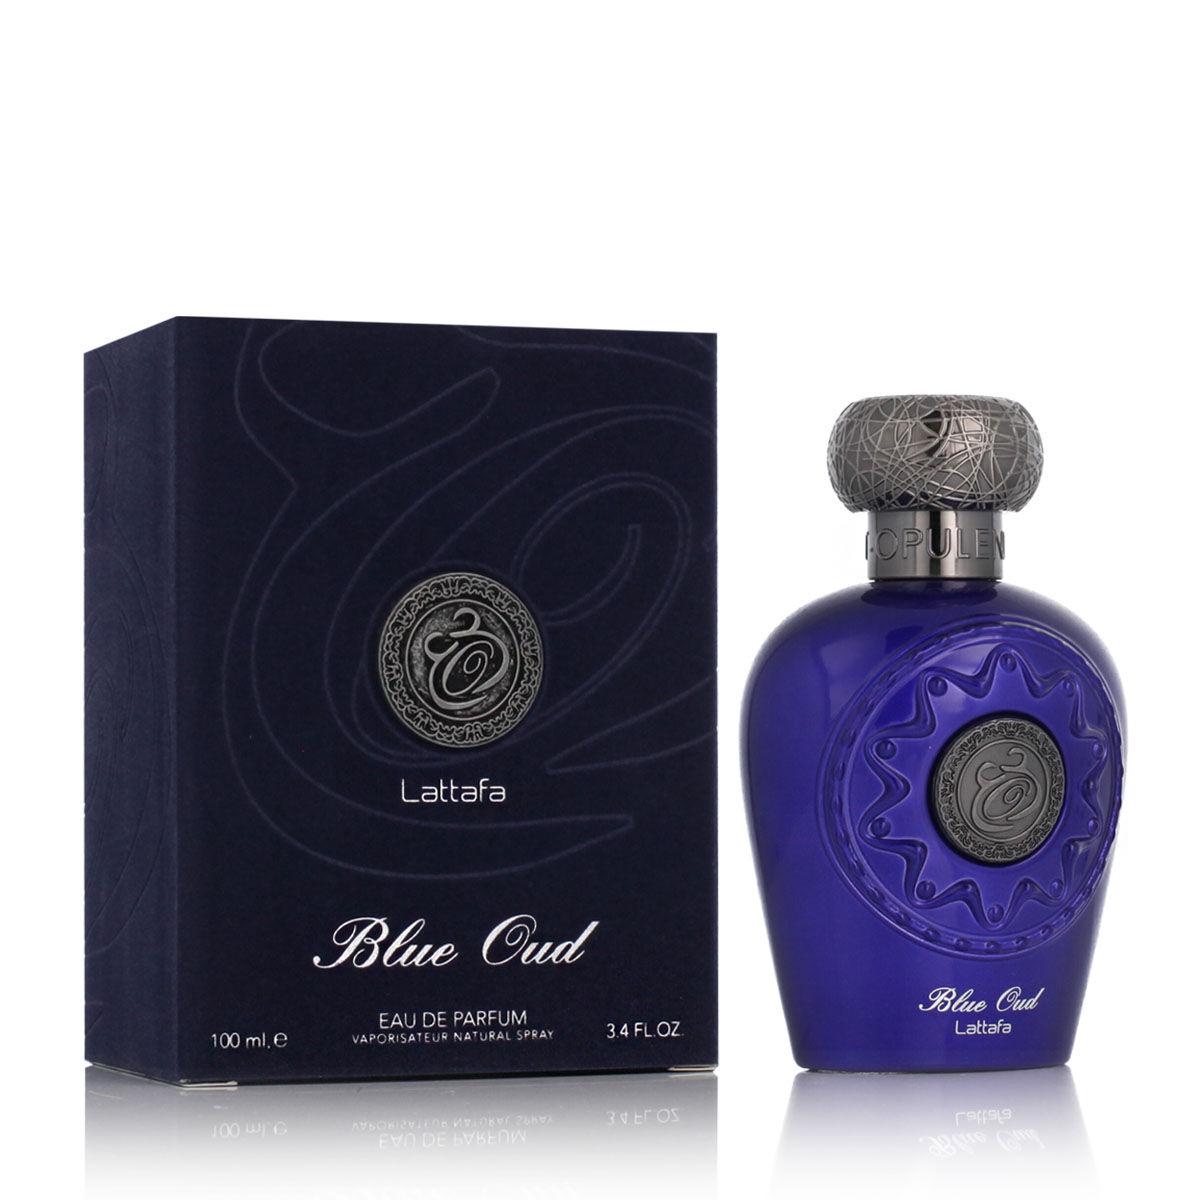 Se Lattafa Perfumes - Blue Oud Eau de Parfum 100 ml hos Boligcenter.dk